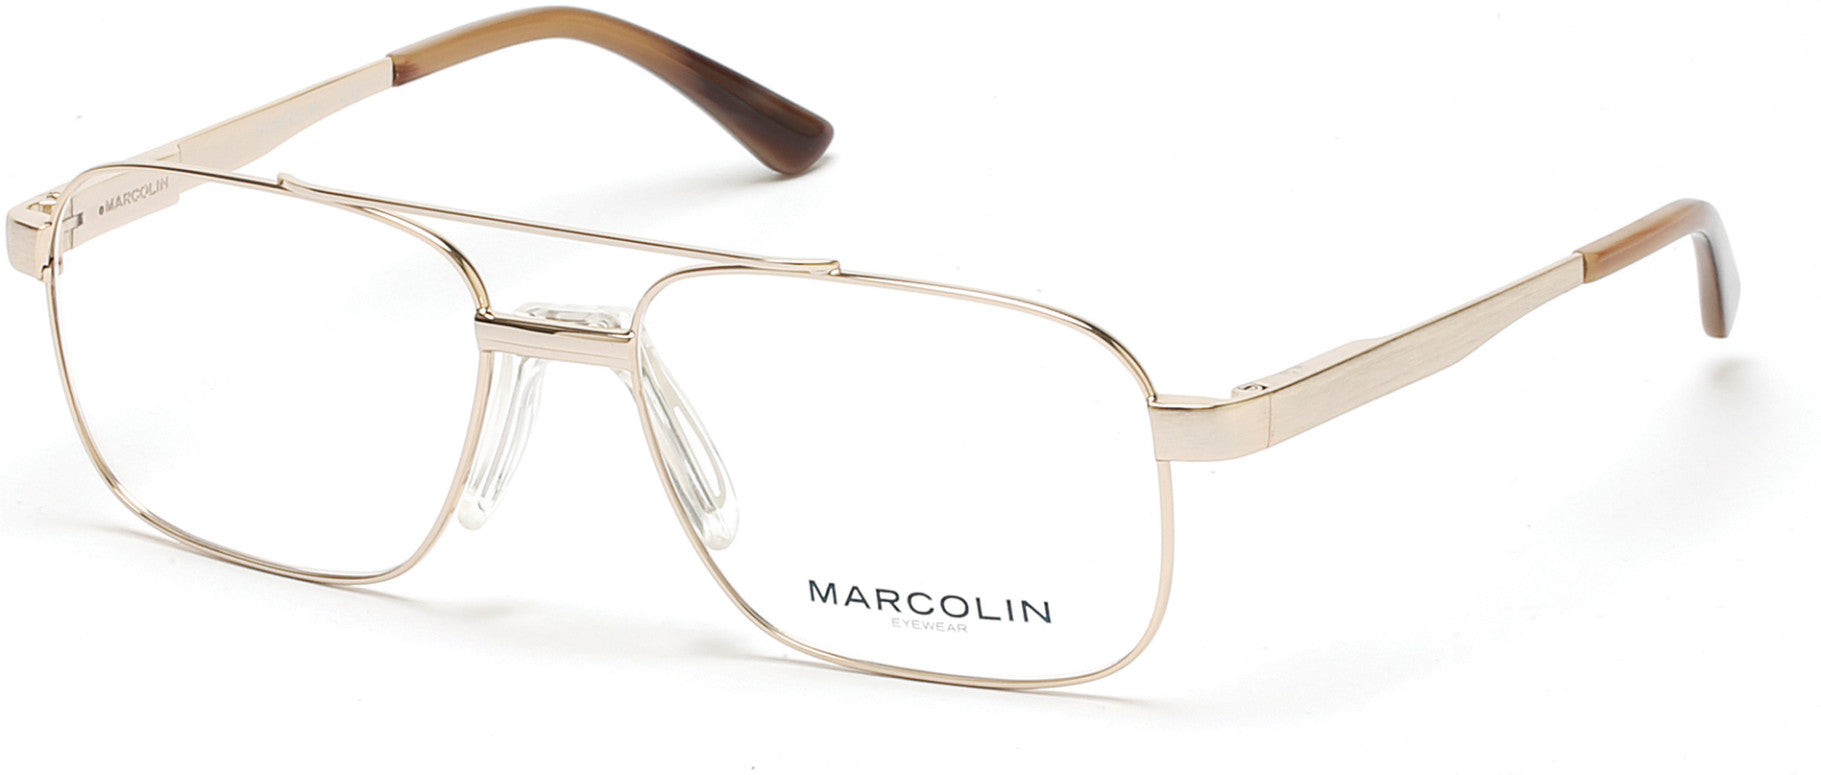 Marcolin MA3005 Eyeglasses 032-032 - Pale Gold